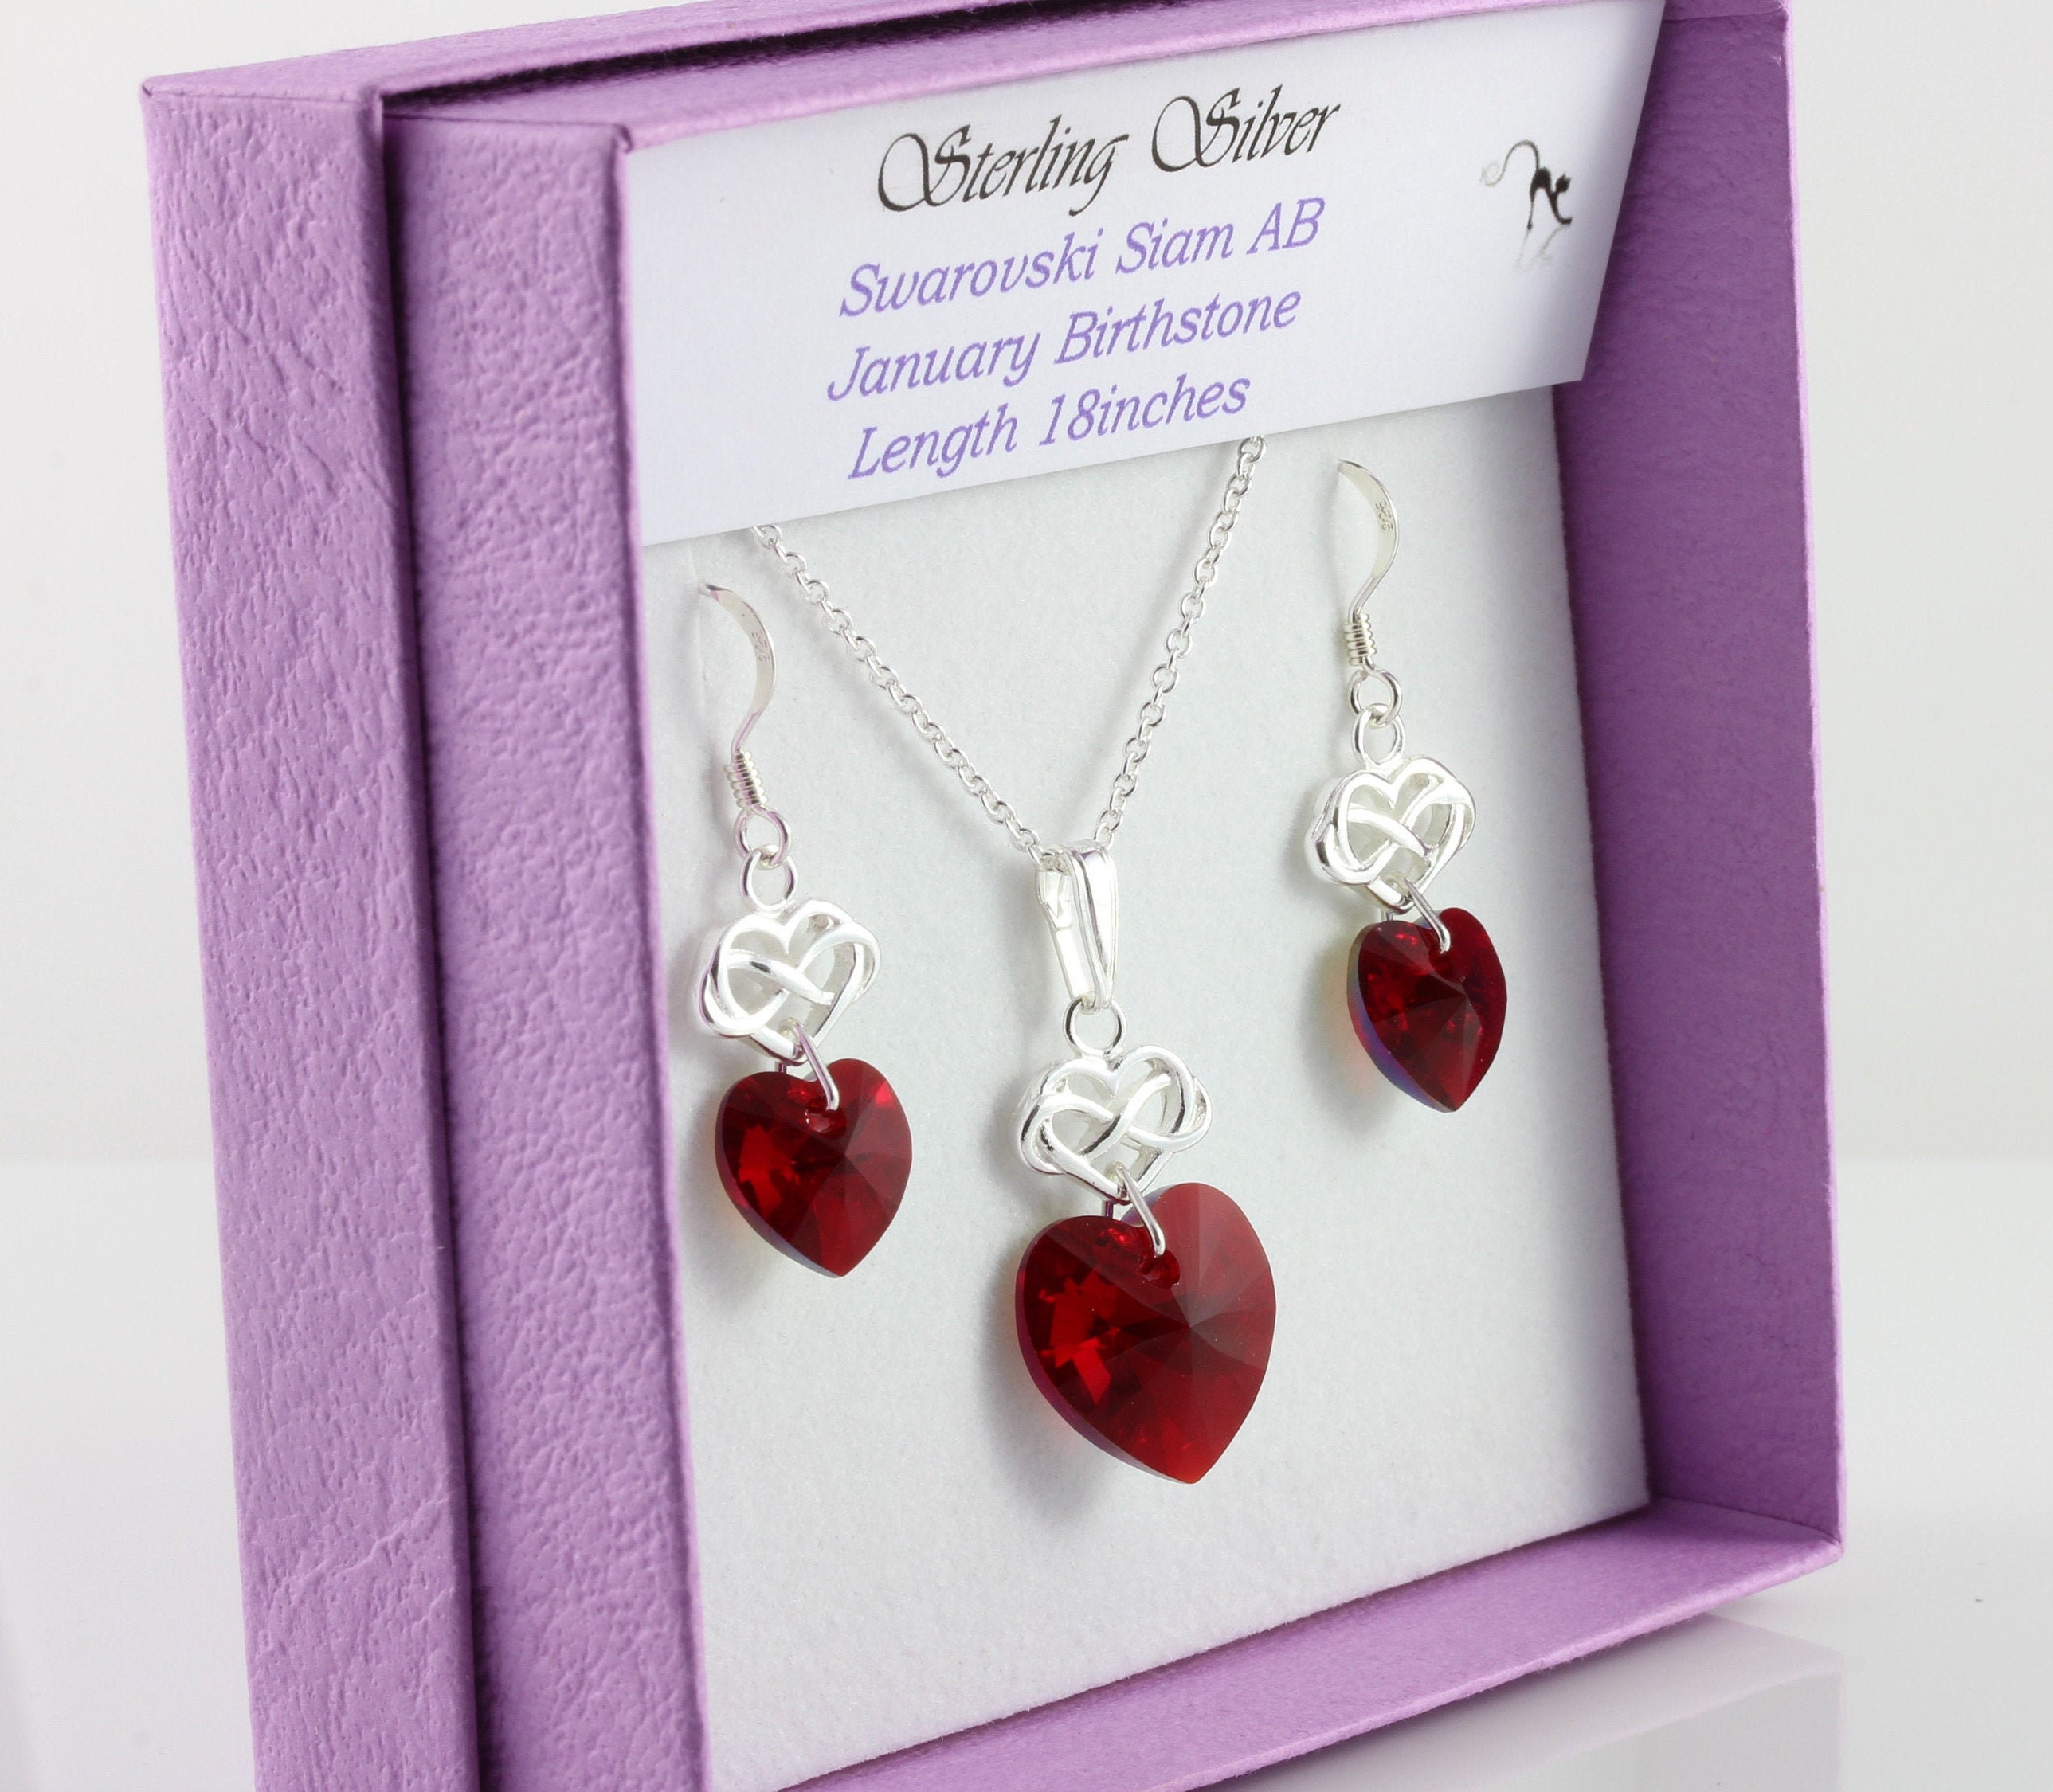 January Birthstone Sterling Silver & Swarovski Siam Ab Crystal Infinity Heart Necklace & Earring Set